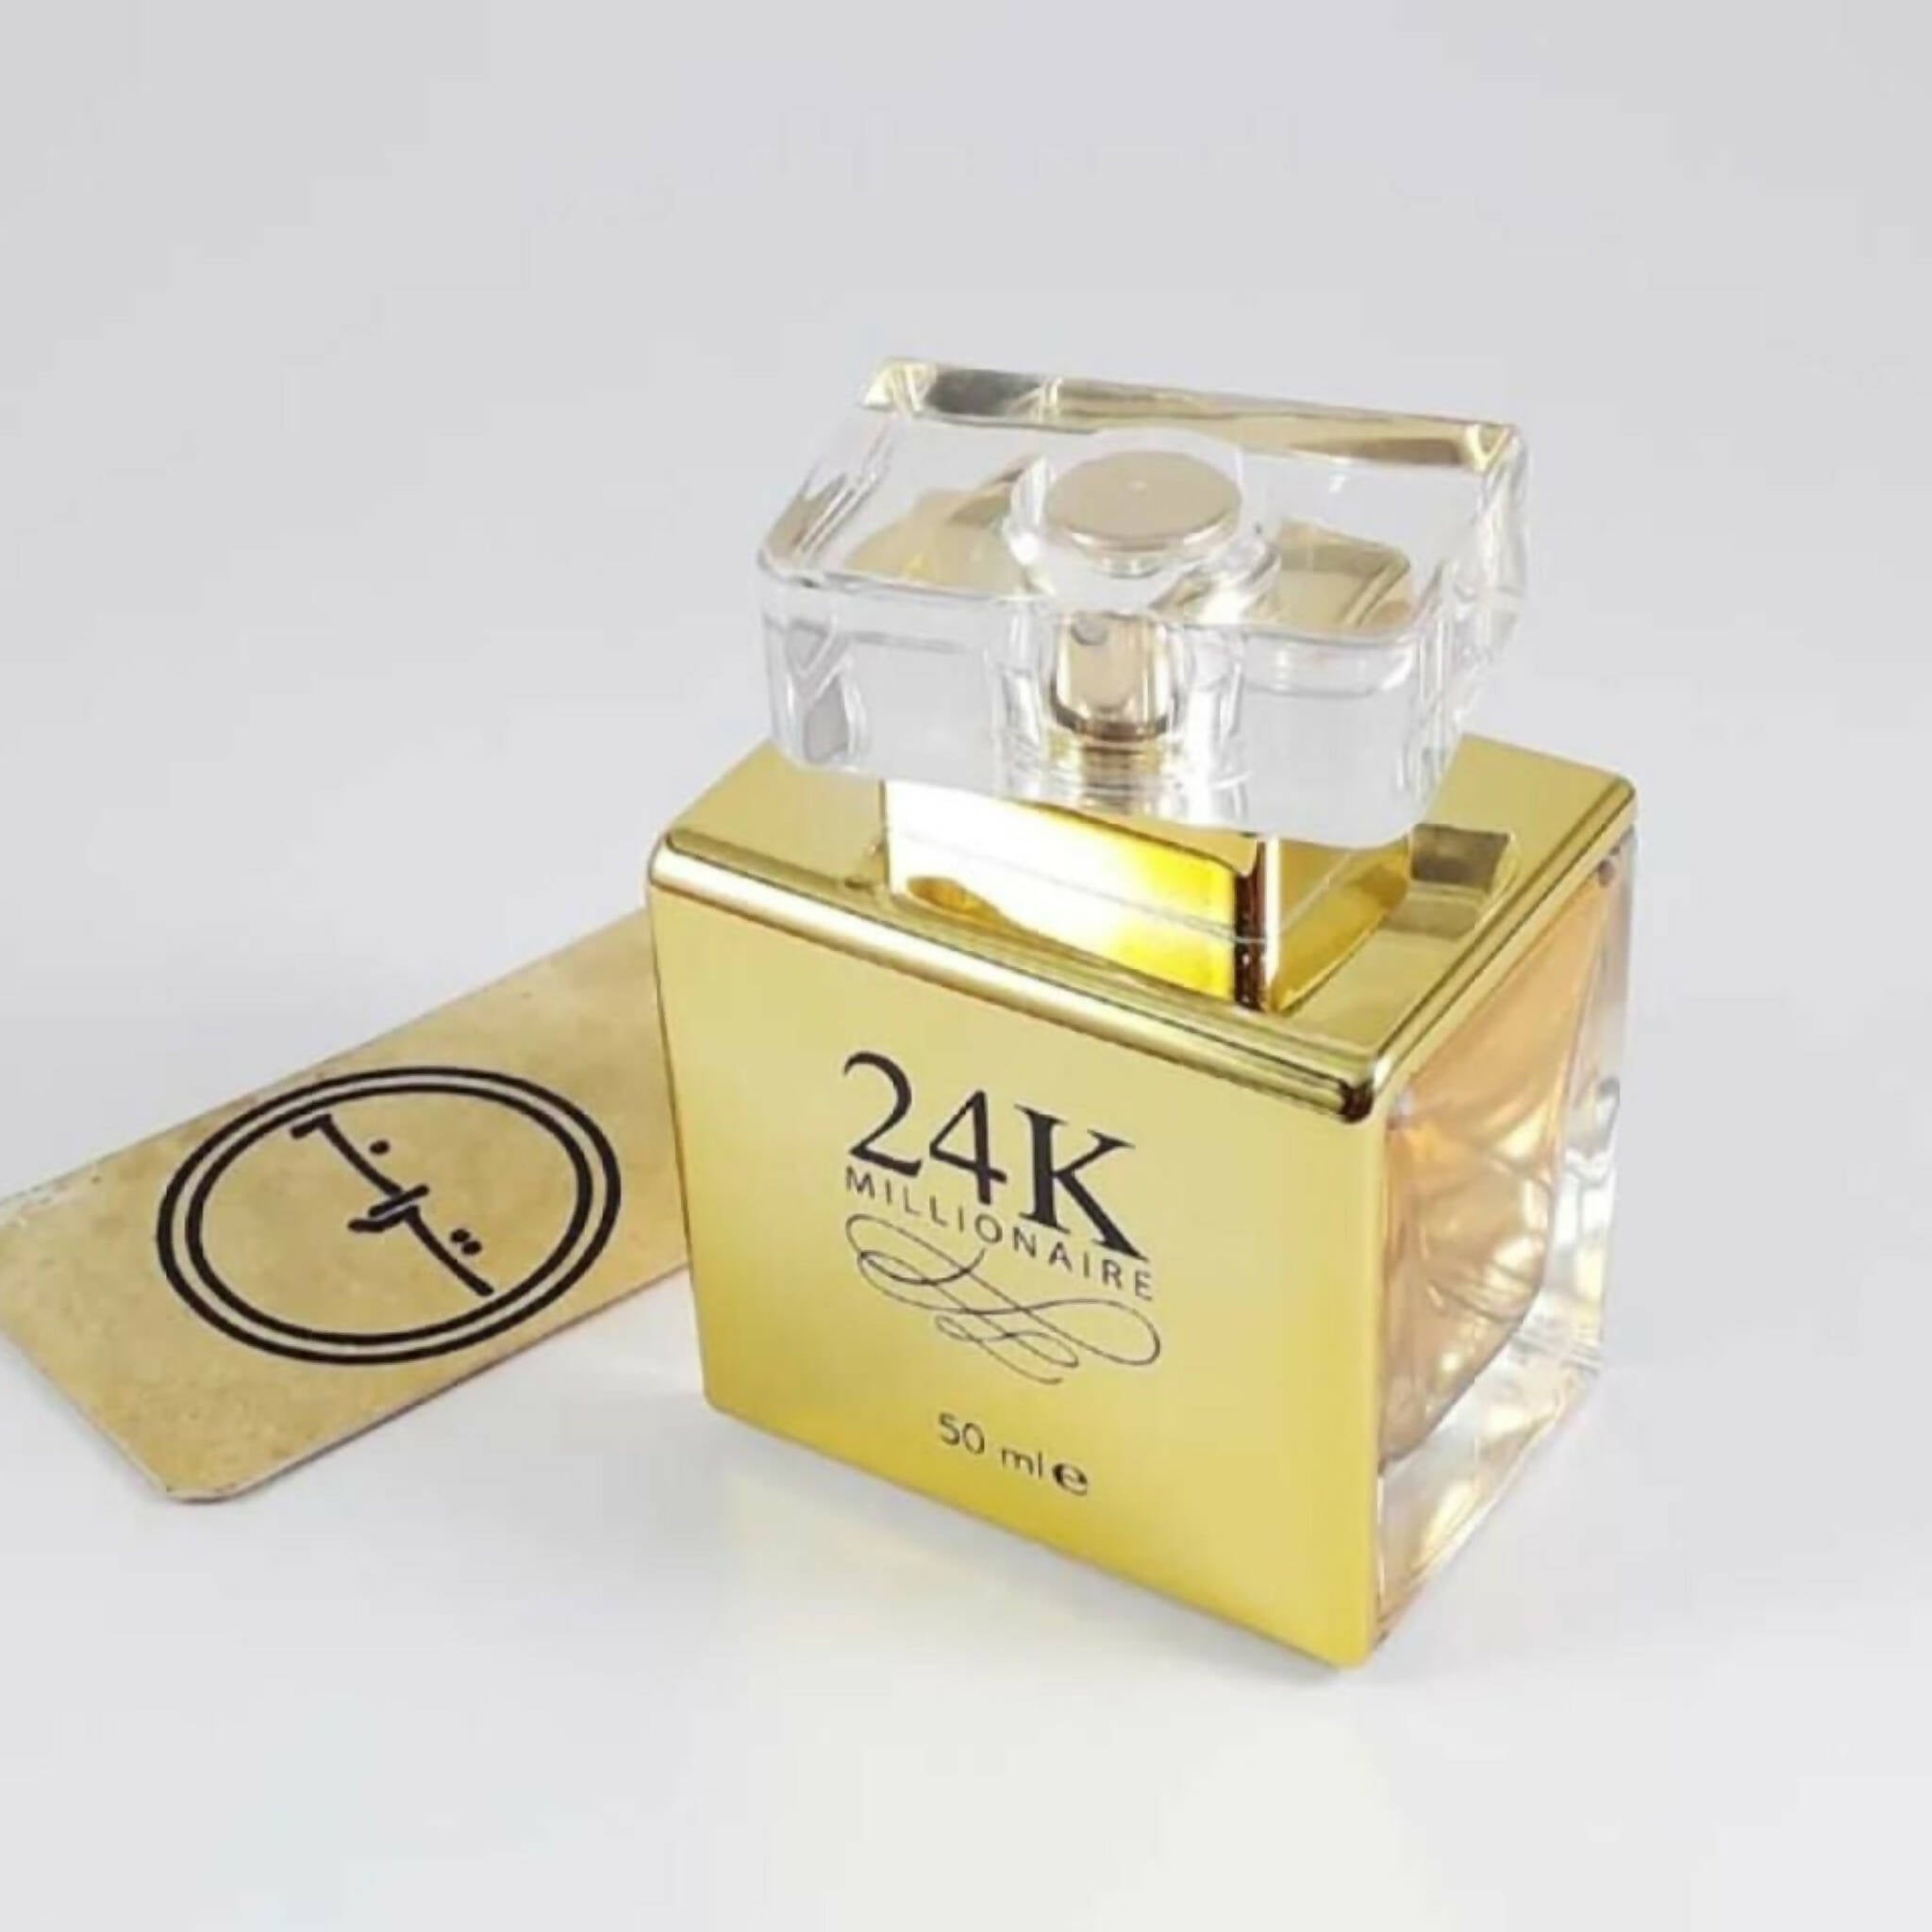 Perfume, leaves a lasting impression, Golden - 24K 50ml, for Men